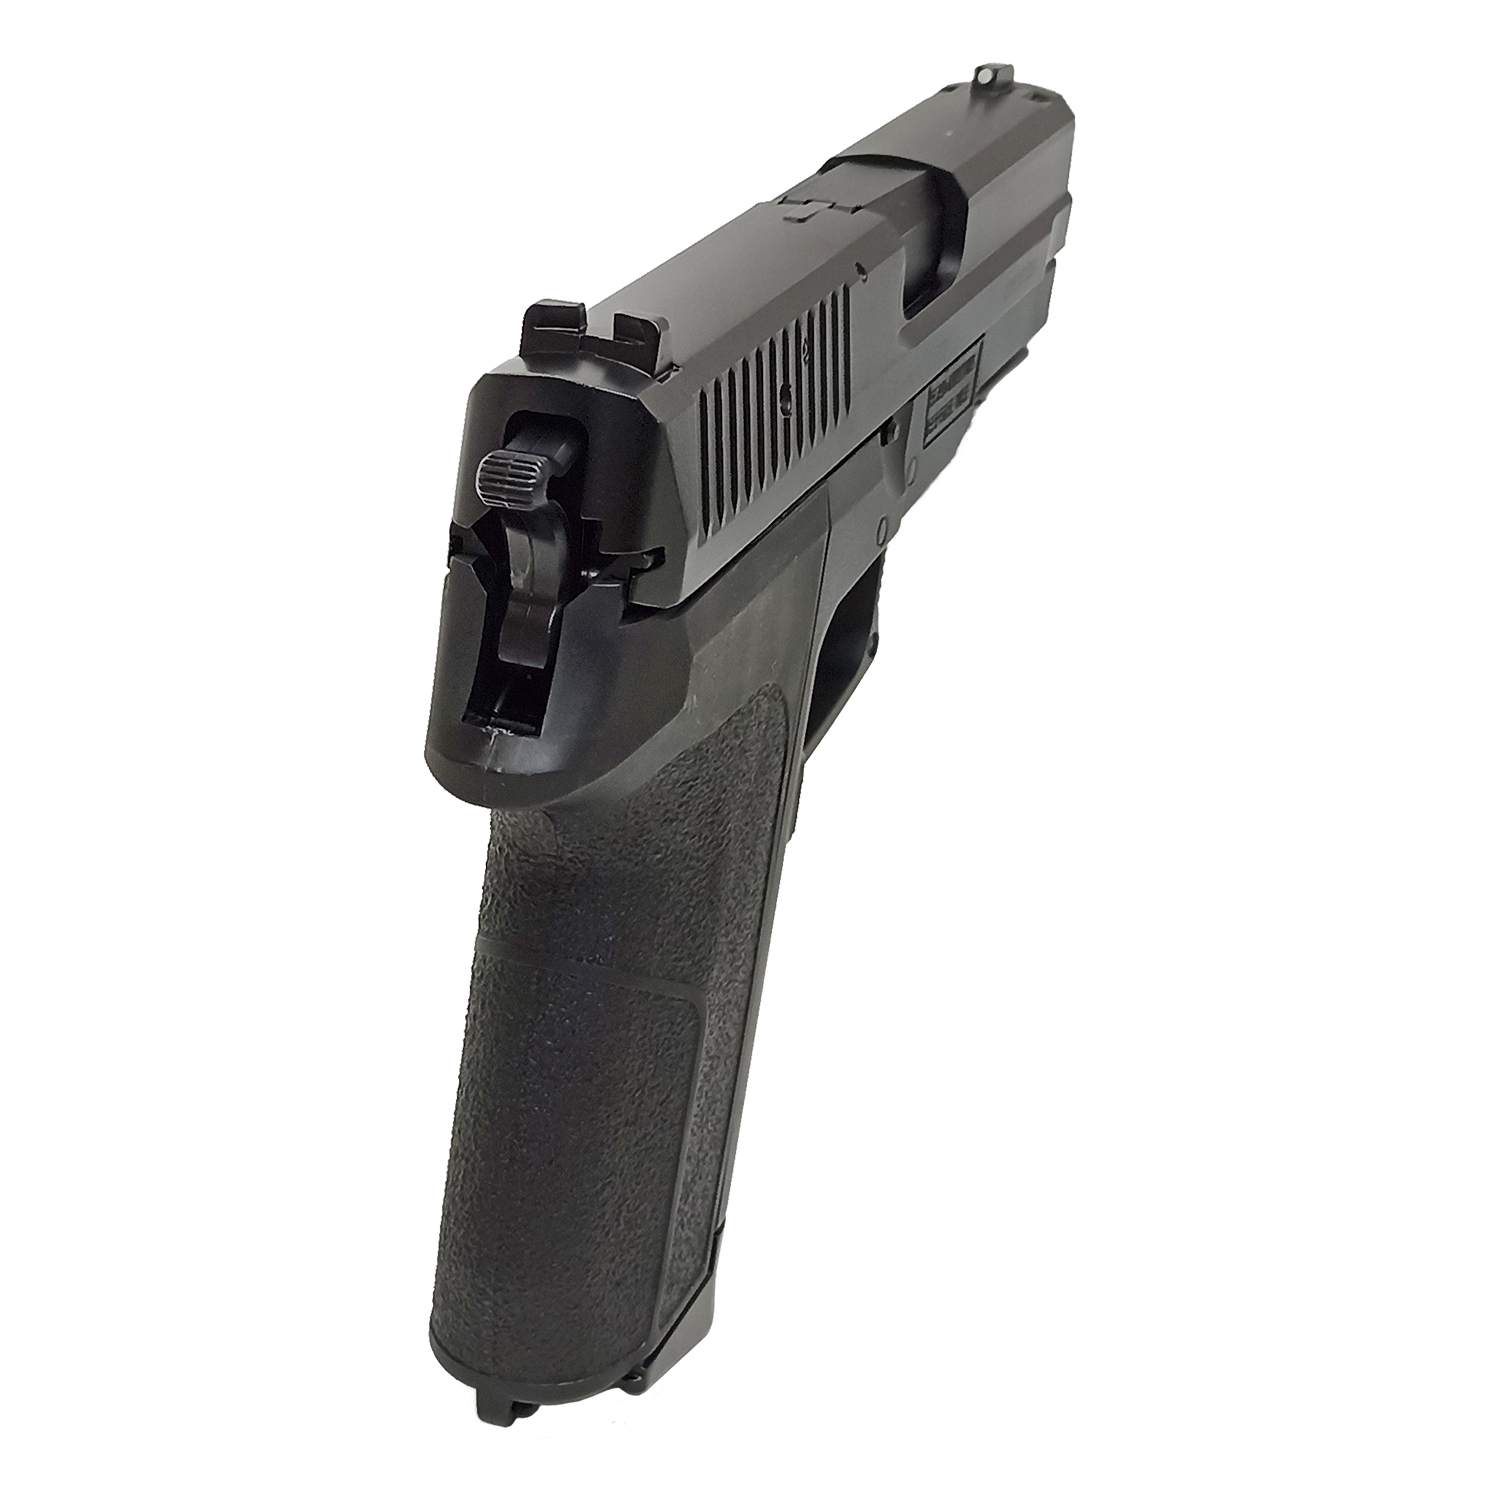 Пистолет пневматический Stalker STSS (аналог "SIG Sauer SP2022"), калибр 4,5 мм